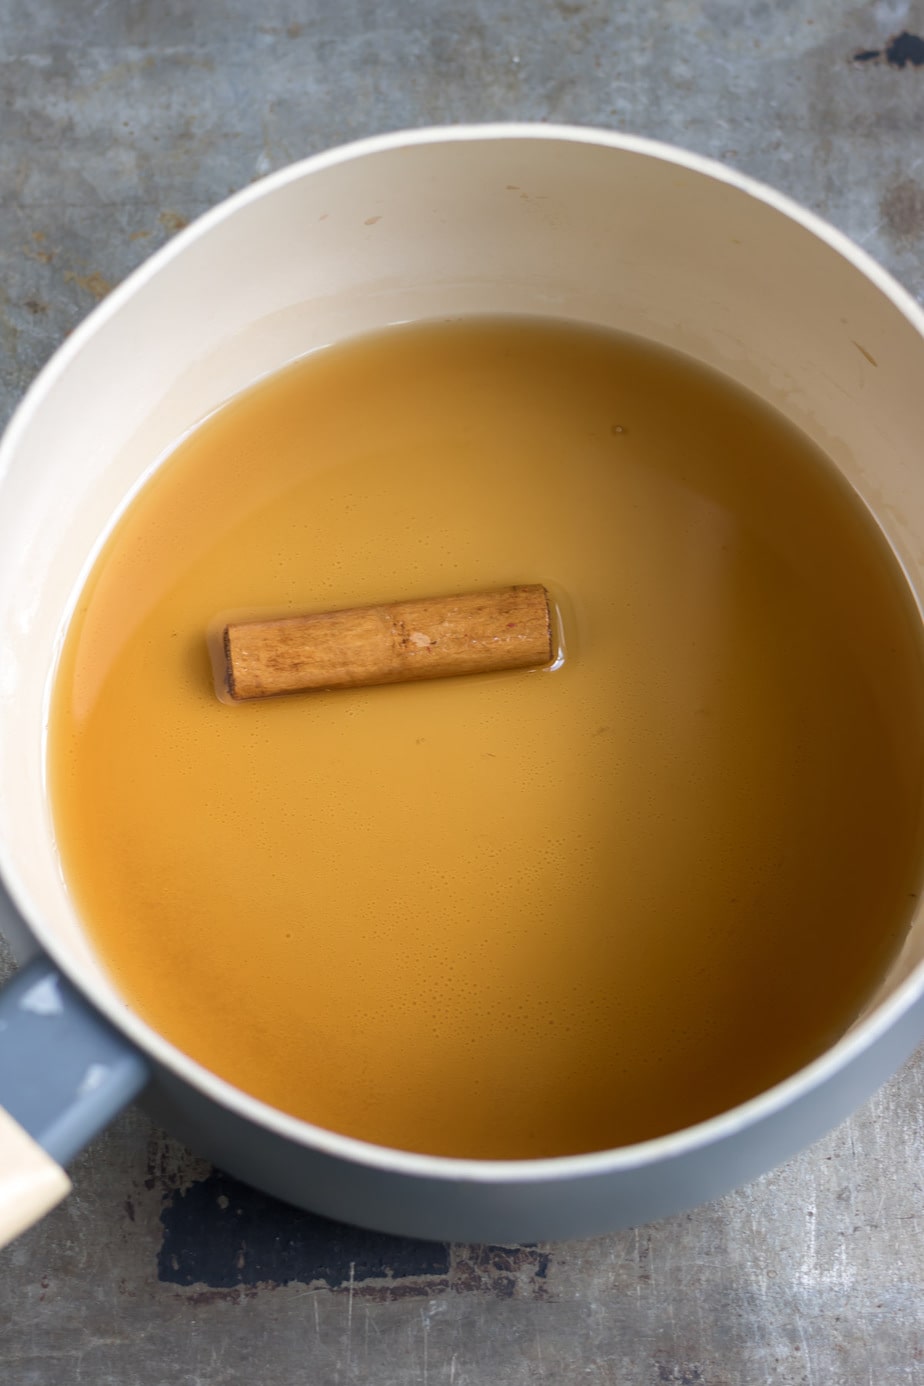 Cinnamon stick in sugar syrup in a pot.